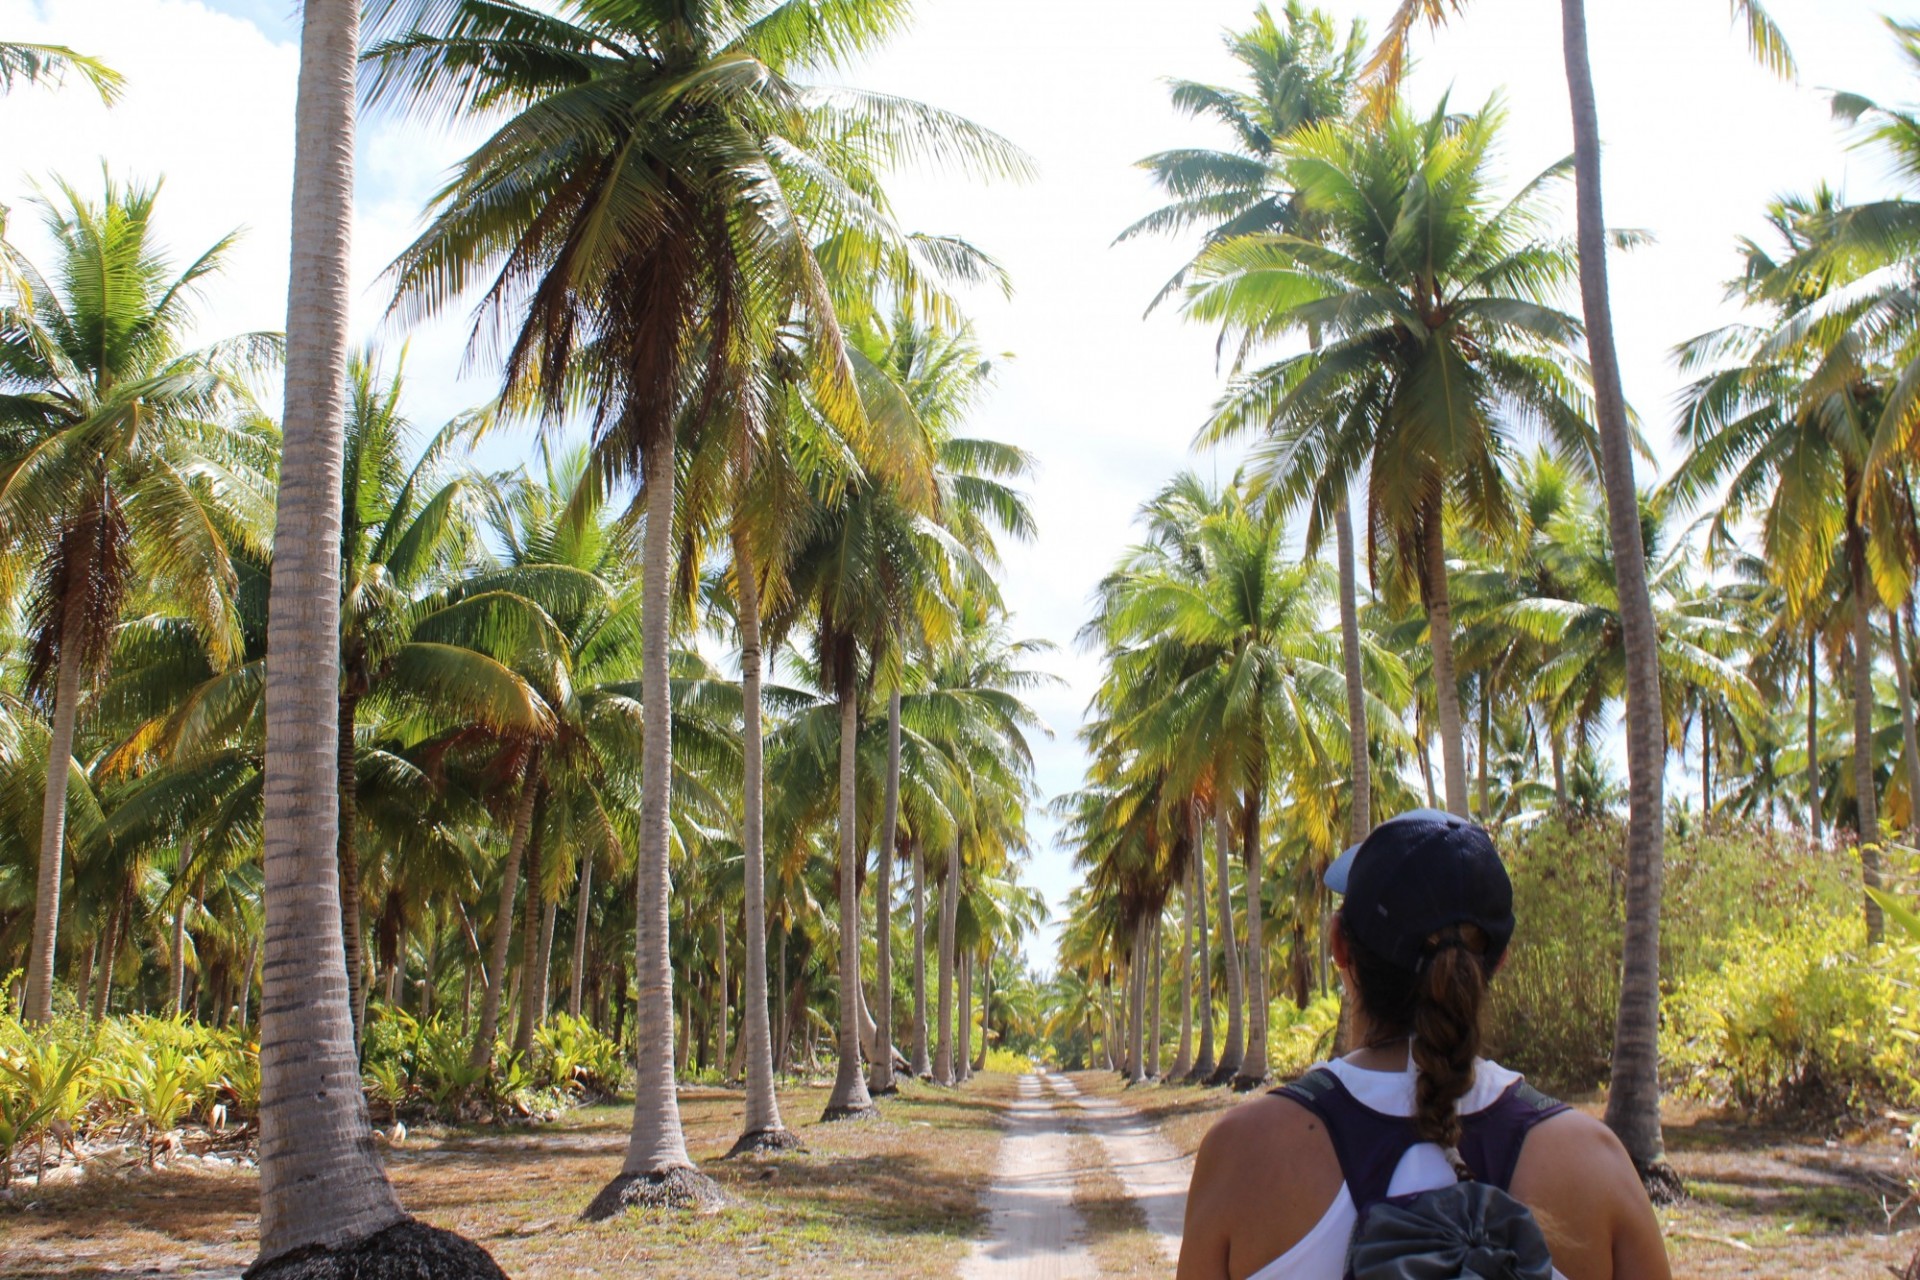 Field of coconuts in the east part of Bikini Island, 2017